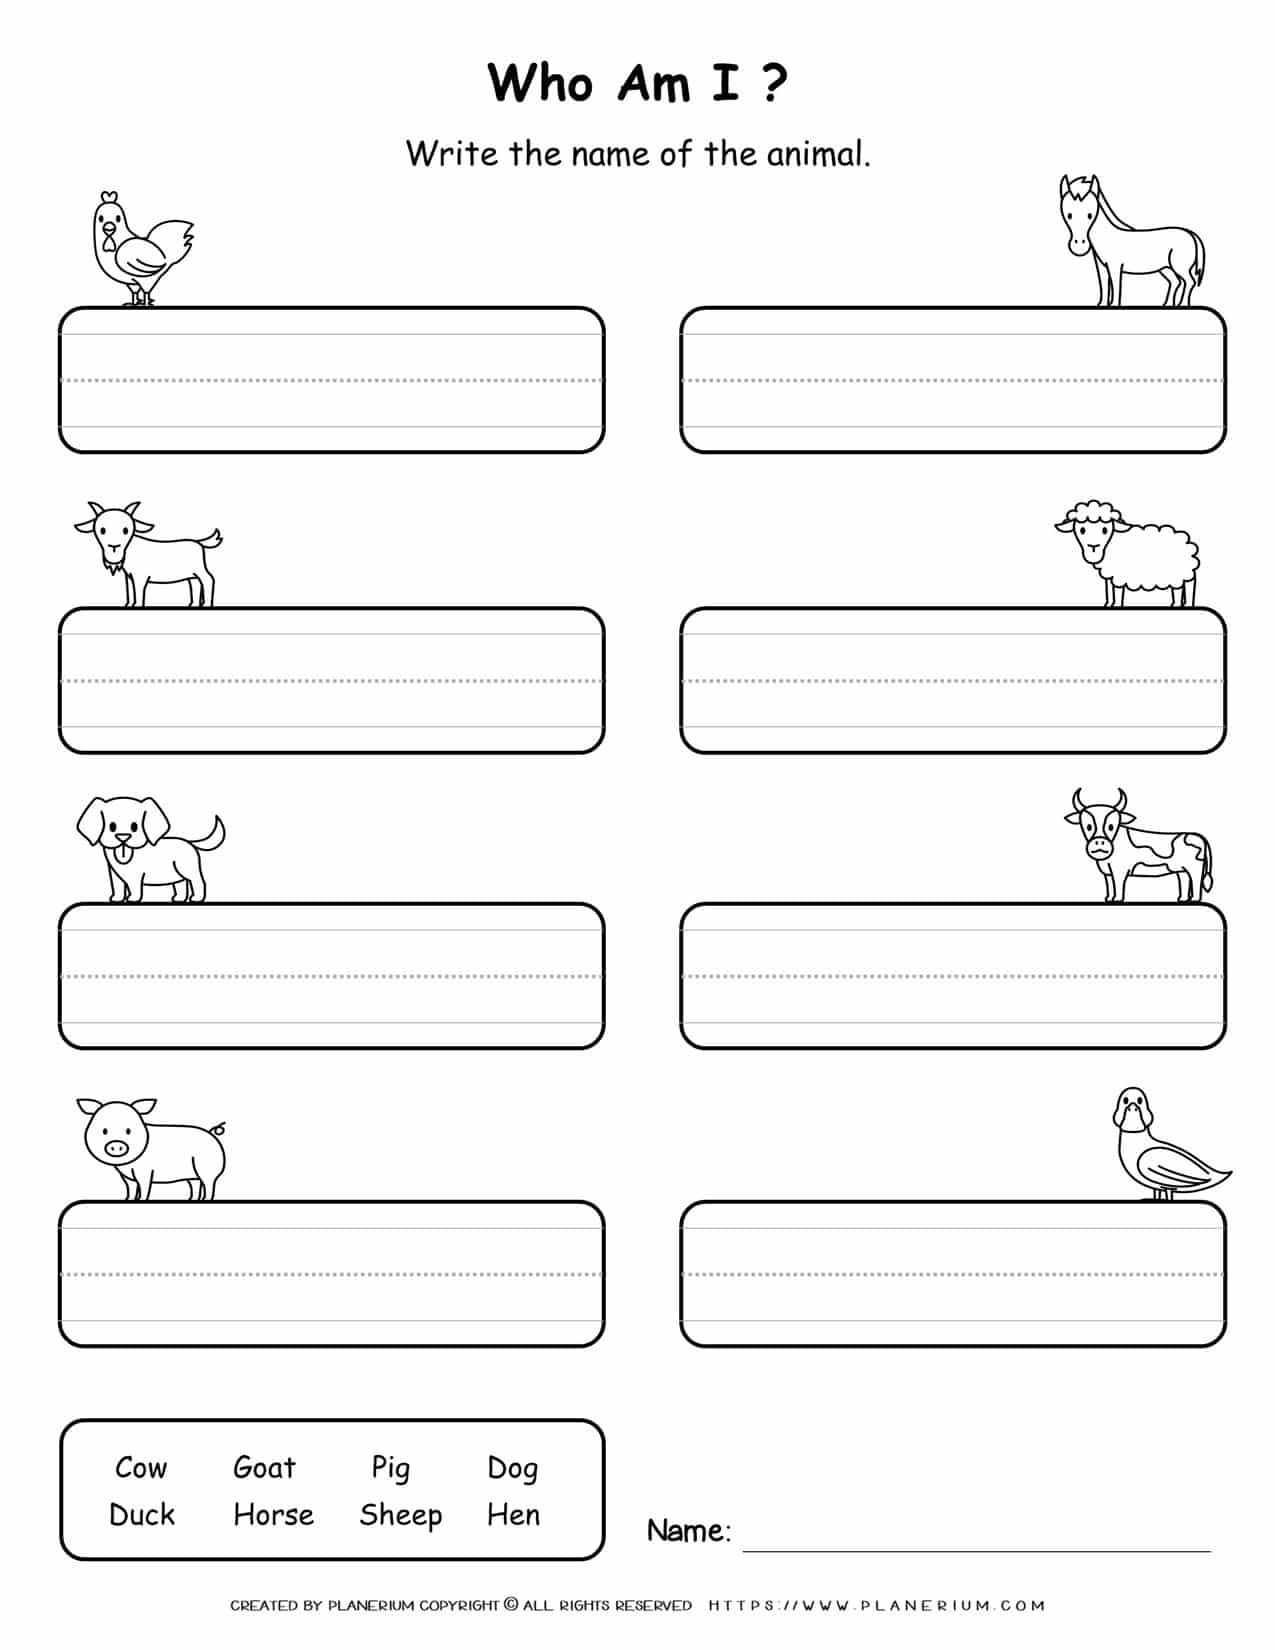 Farm Animals - Writing Names | Planerium